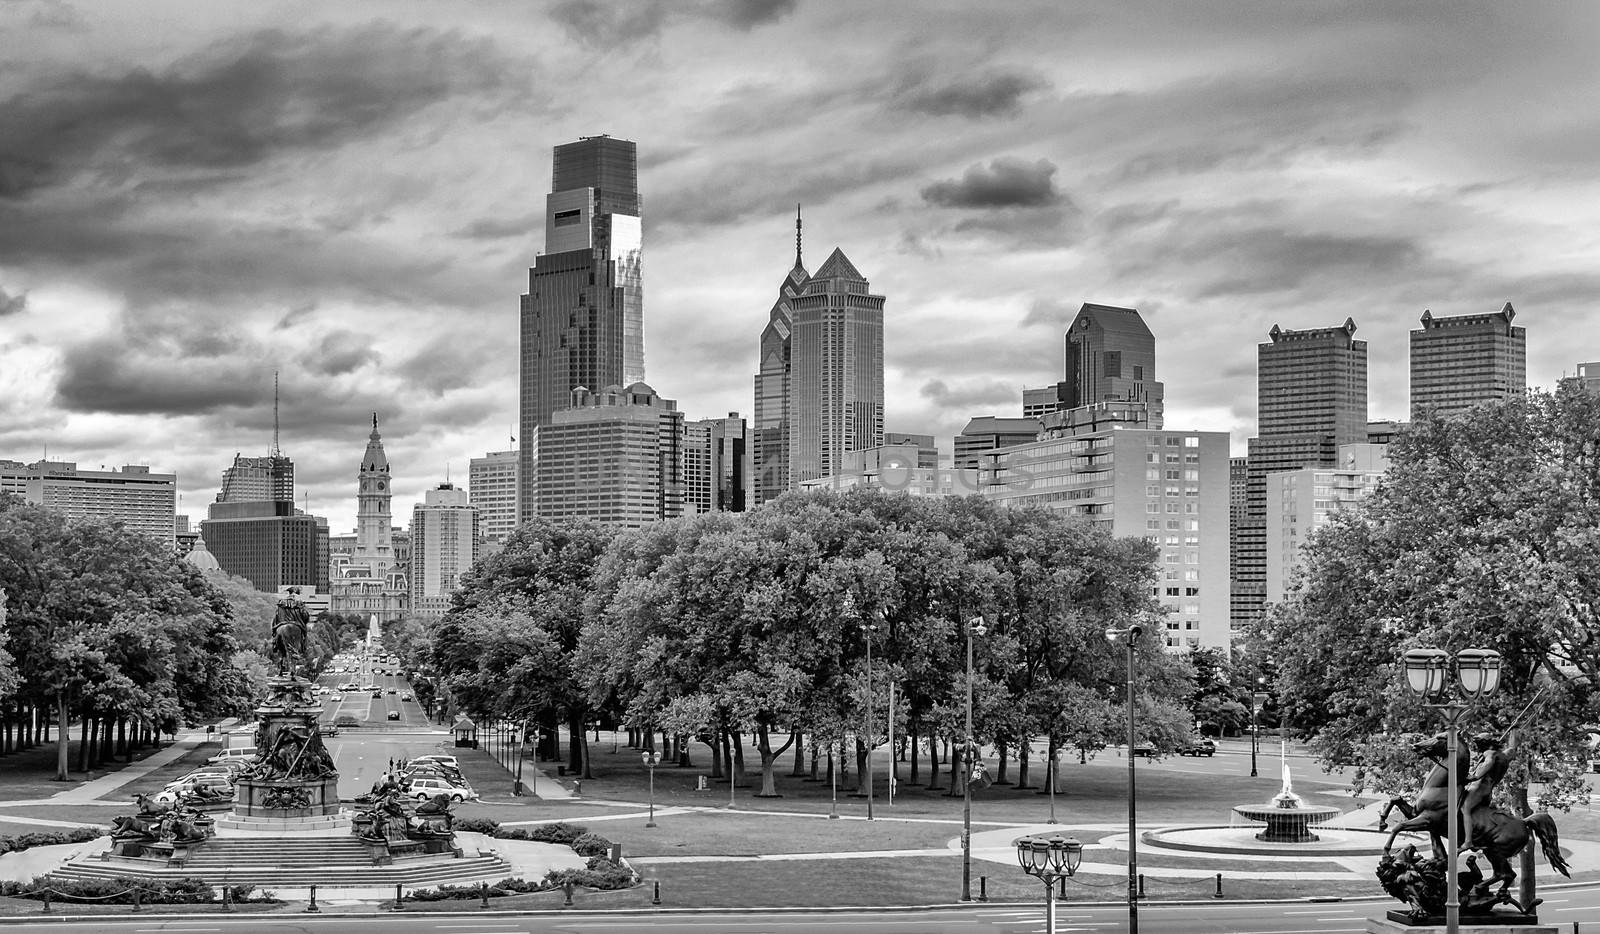 Philadelphia Skyline, daylight